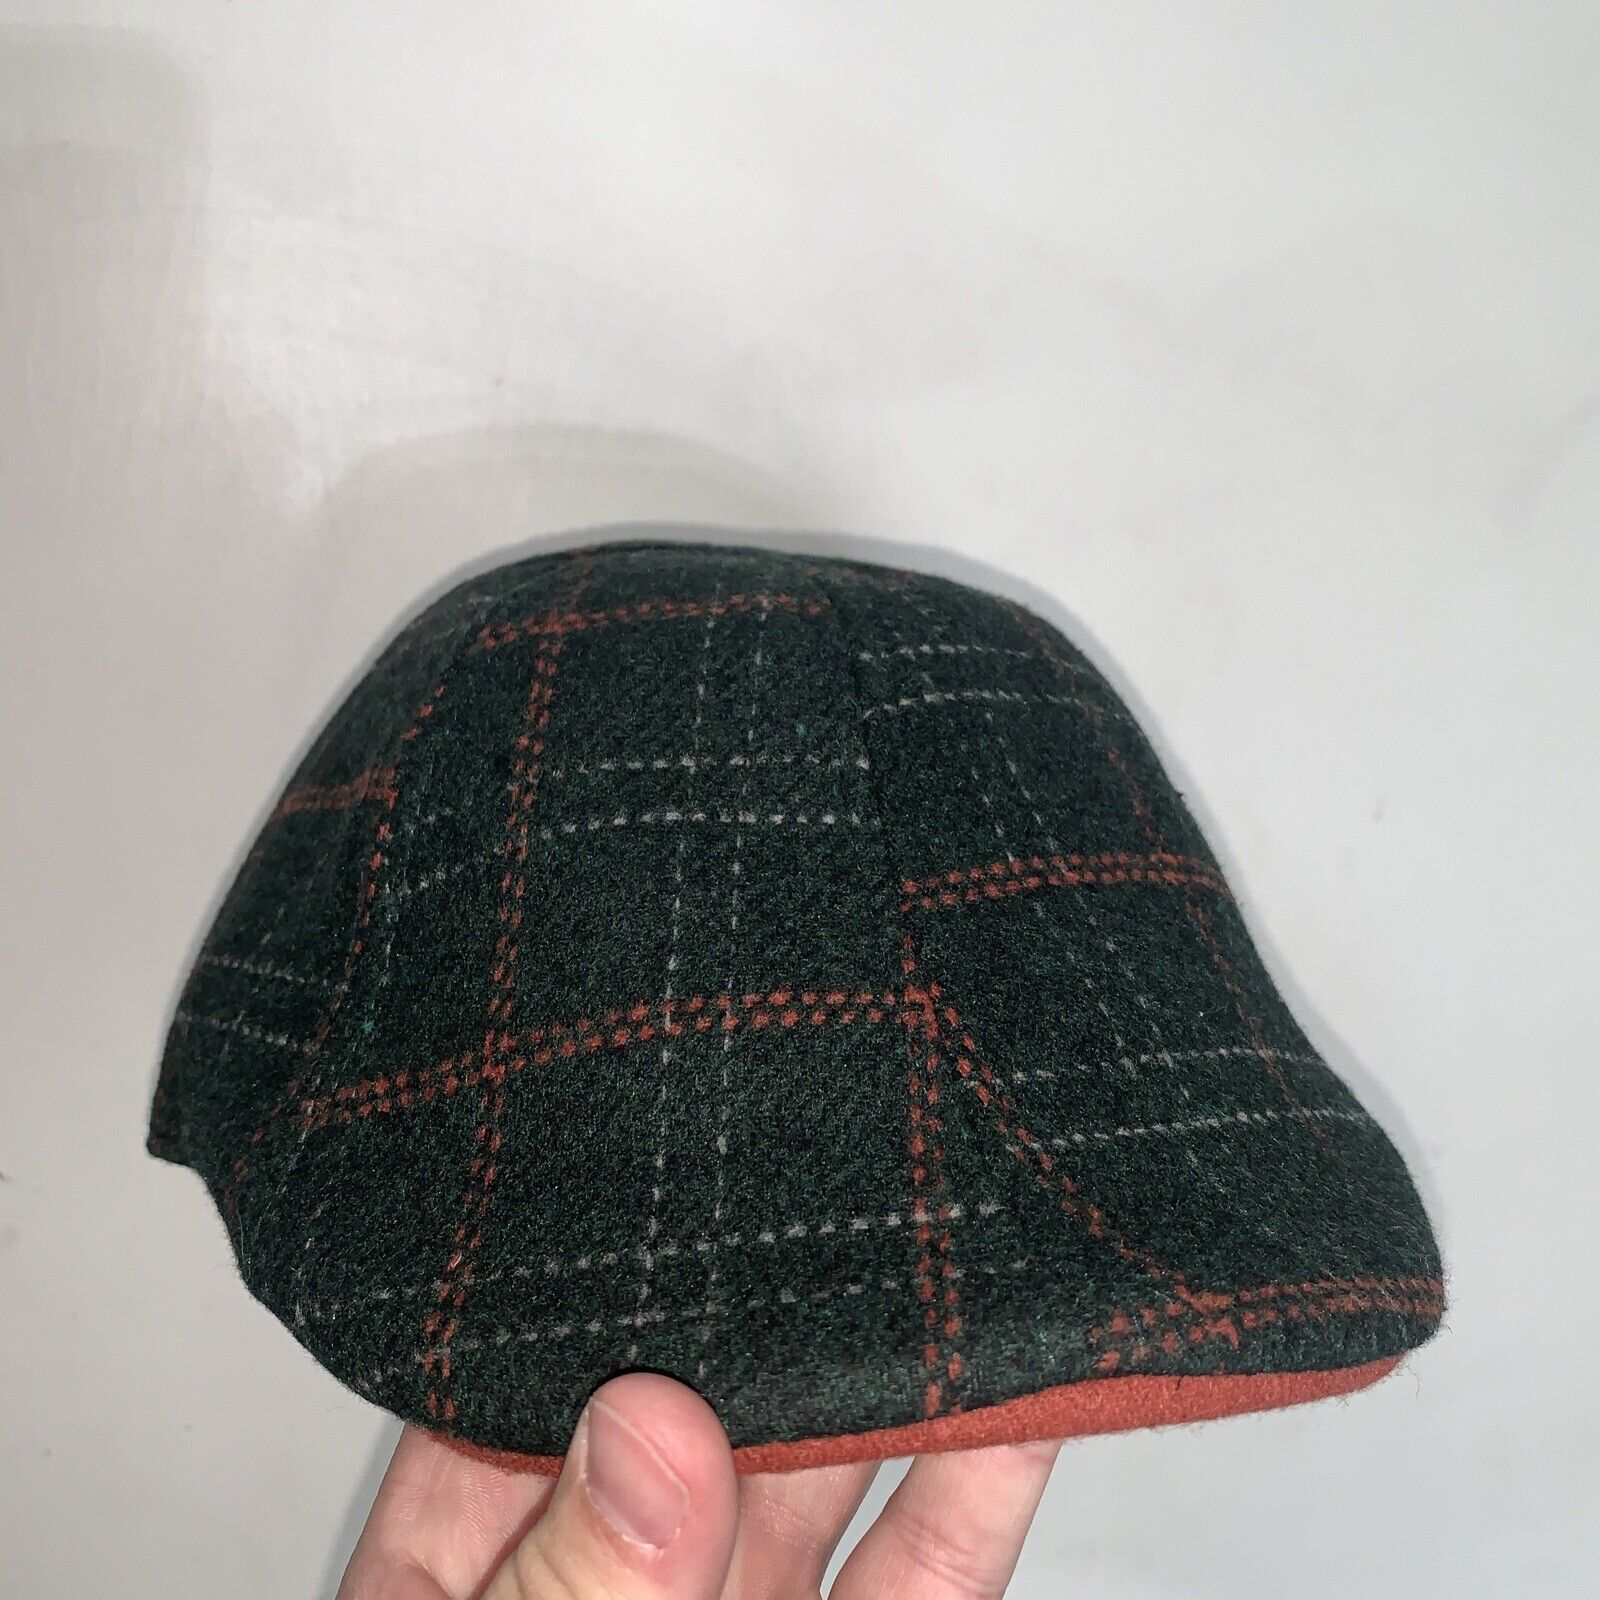 Boston Scally Company “ Celtic Bone” Cap Hat Size XXL SOLD OUT